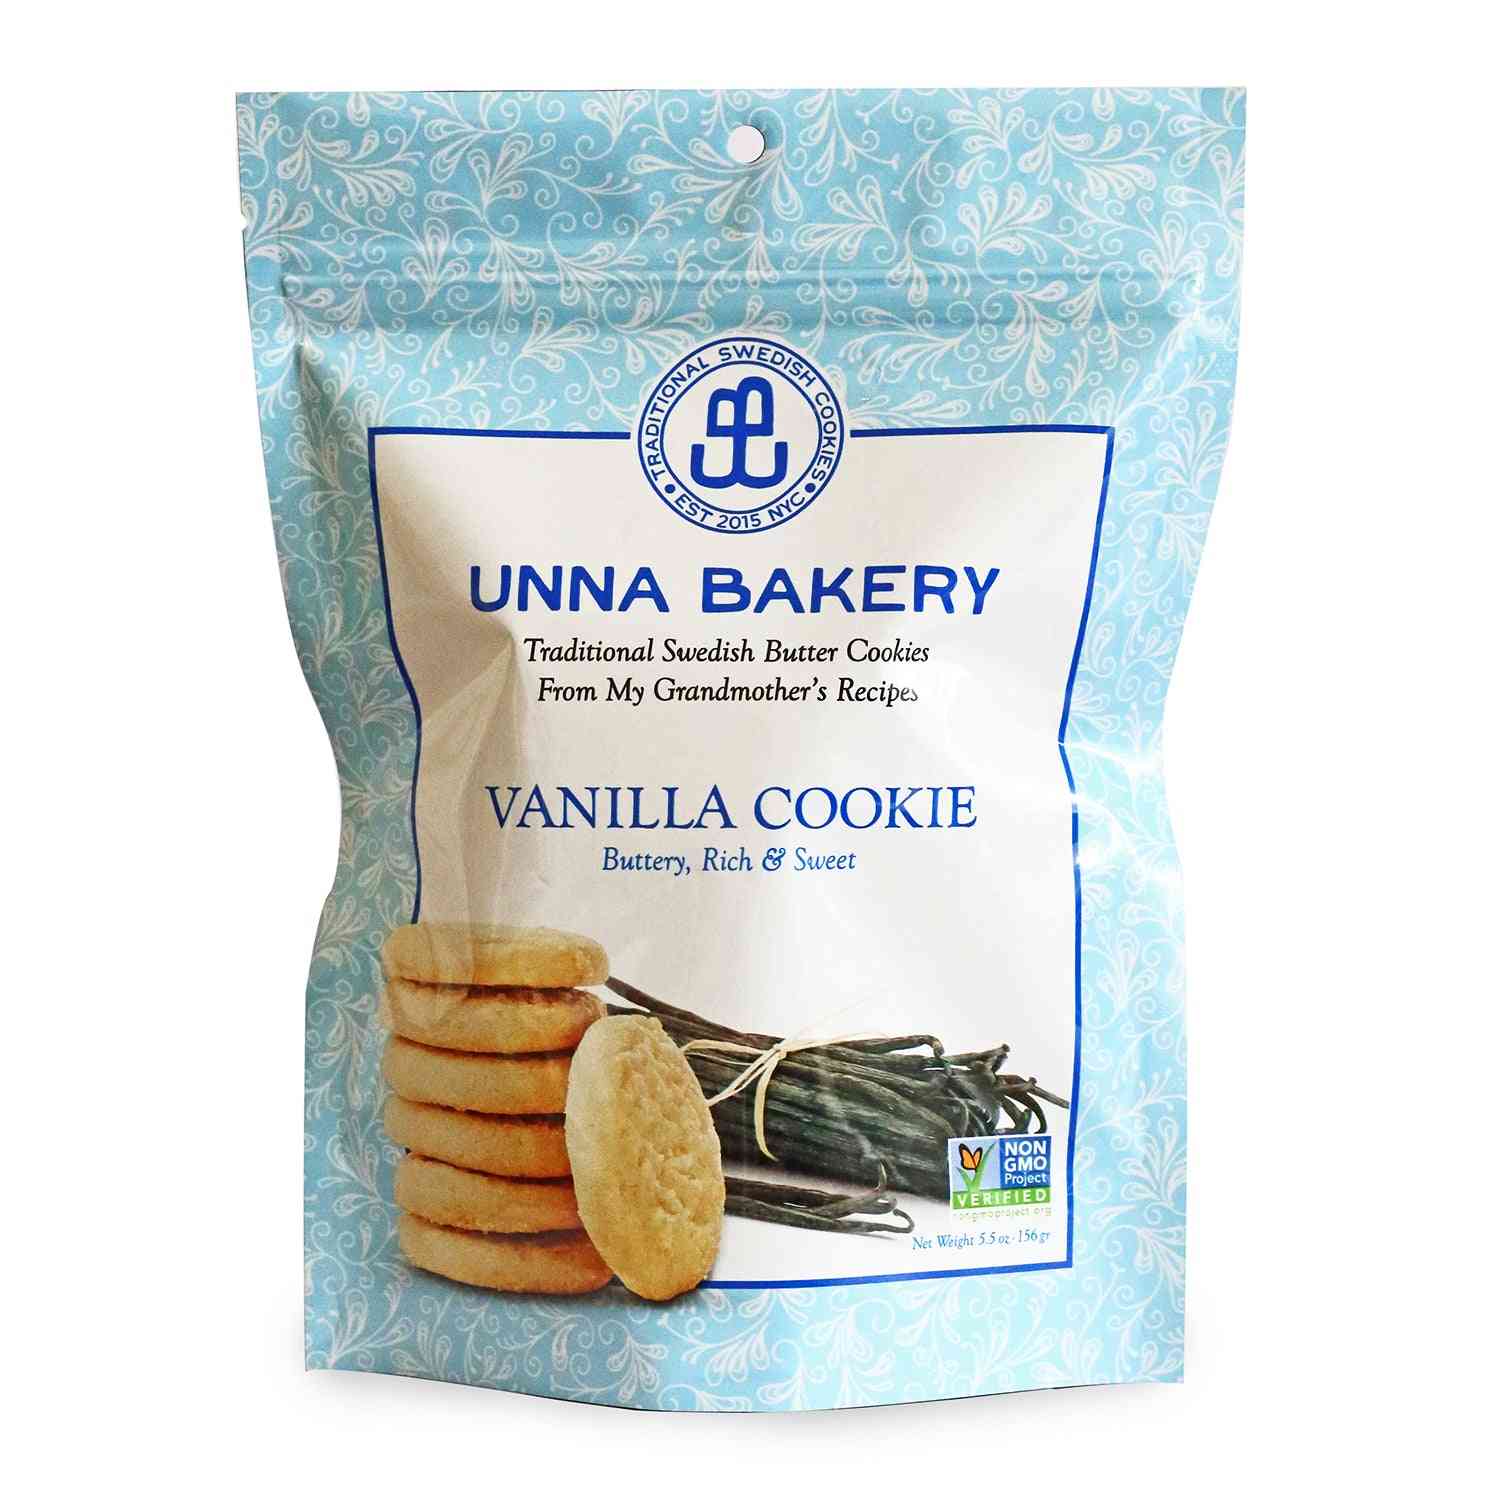 Vanilla Sugar Cookies 5.5 Oz From Unna Bakery